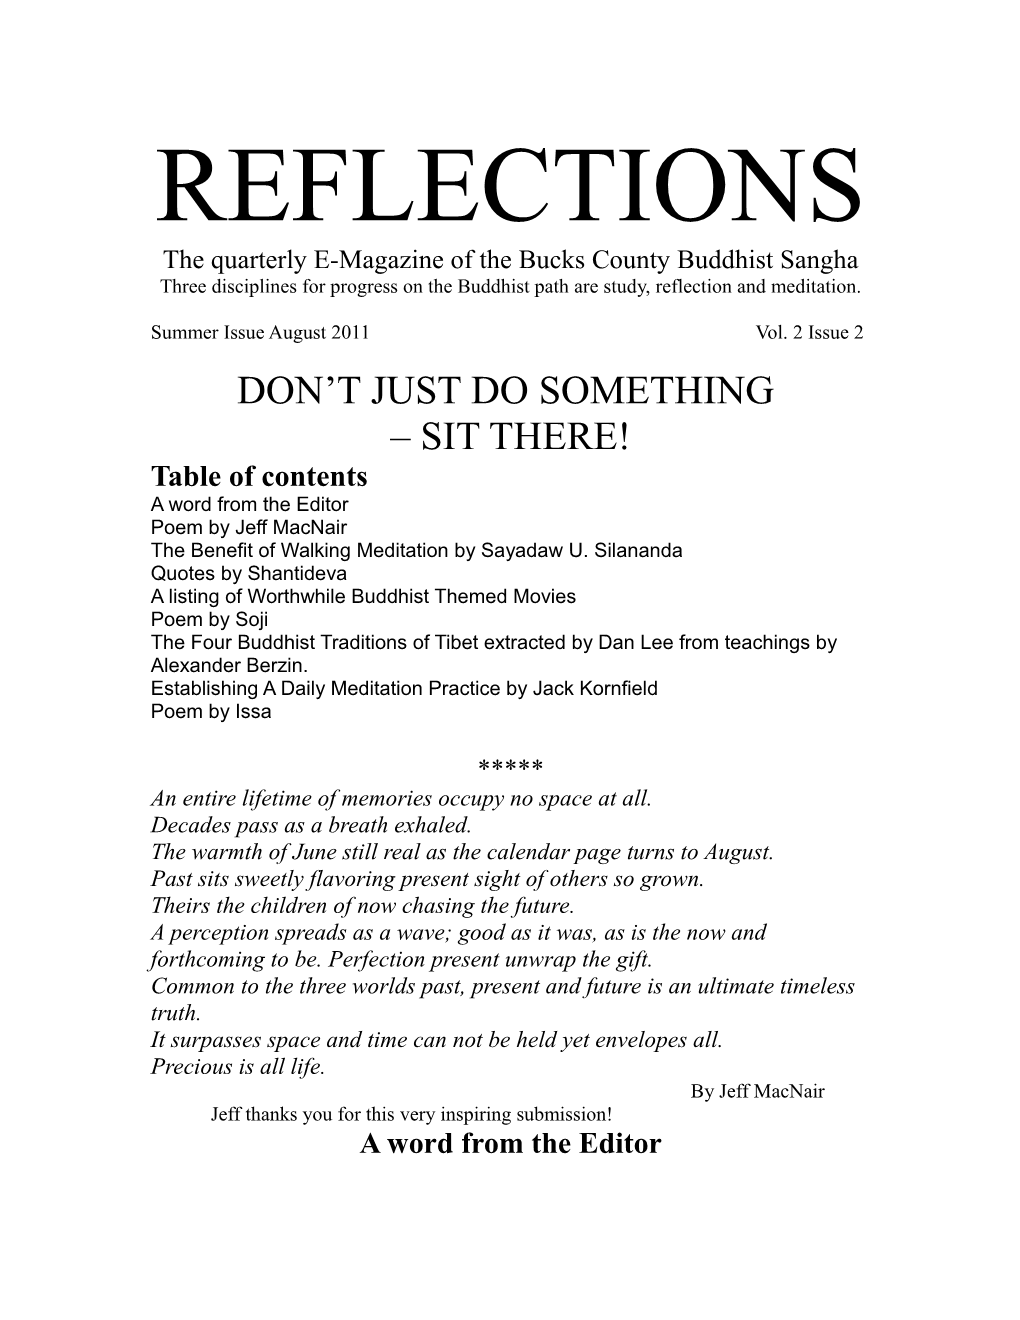 REFLECTIONS the Quarterly E-Magazine of the Bucks County Buddhist Sangha